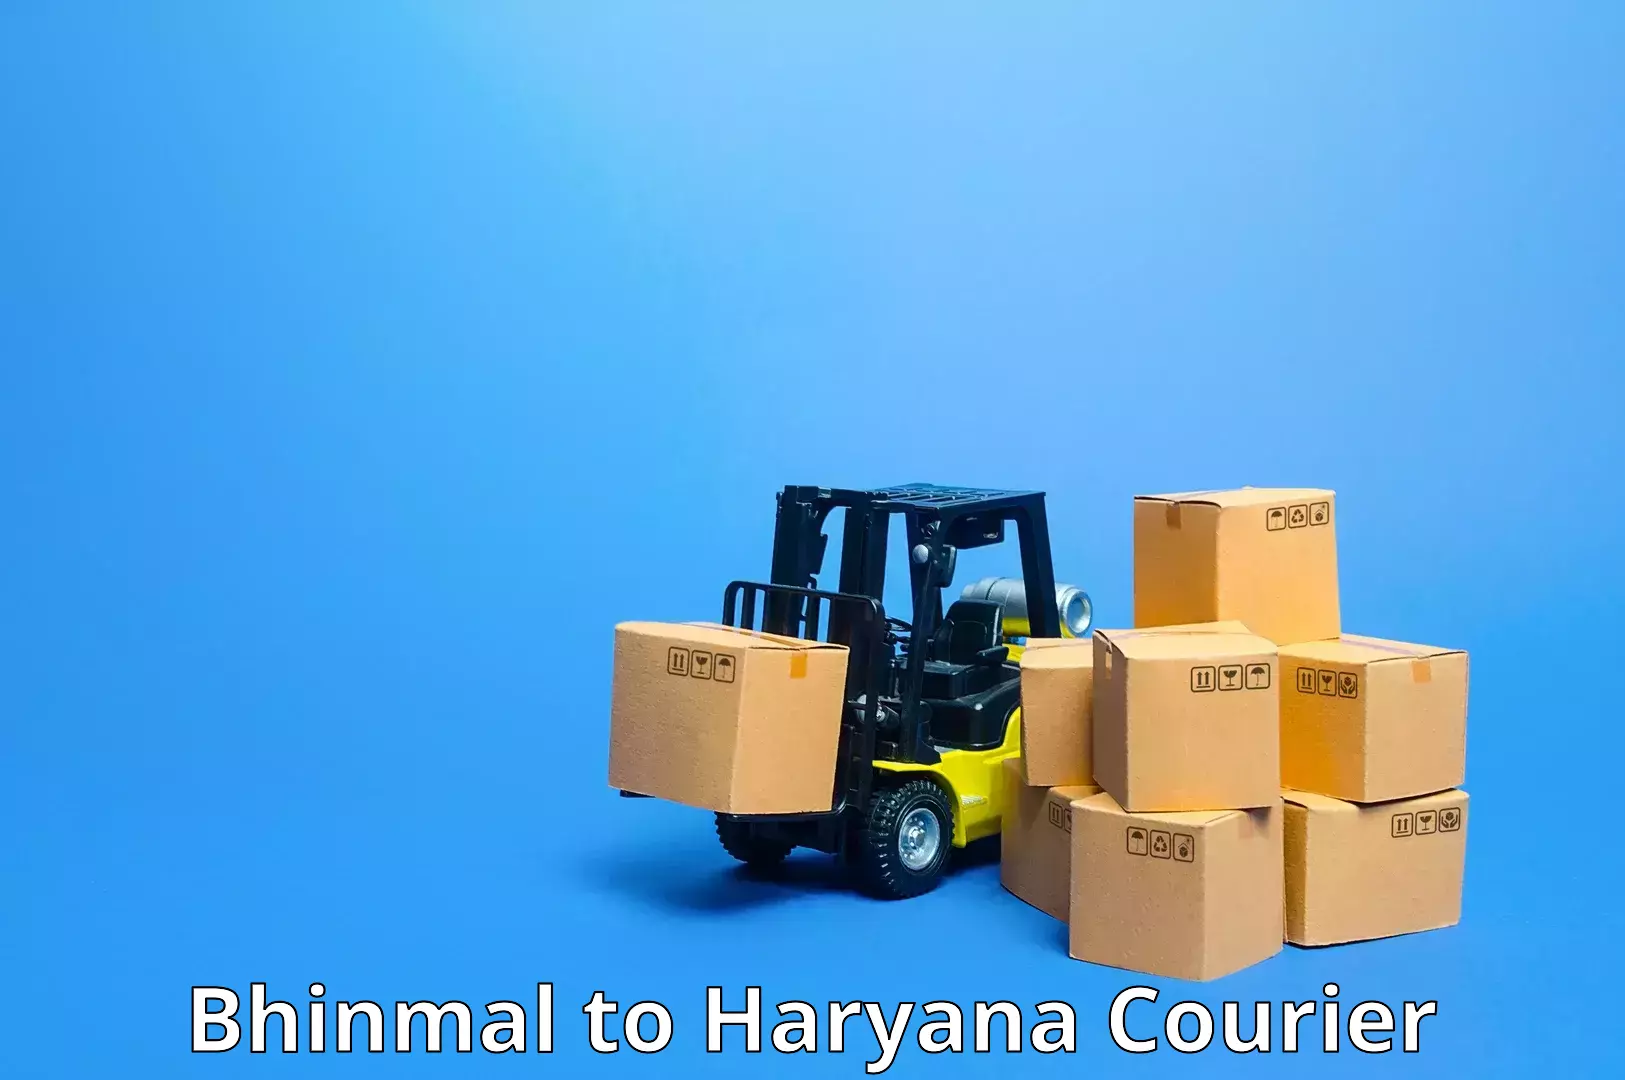 High-capacity shipping options Bhinmal to NCR Haryana